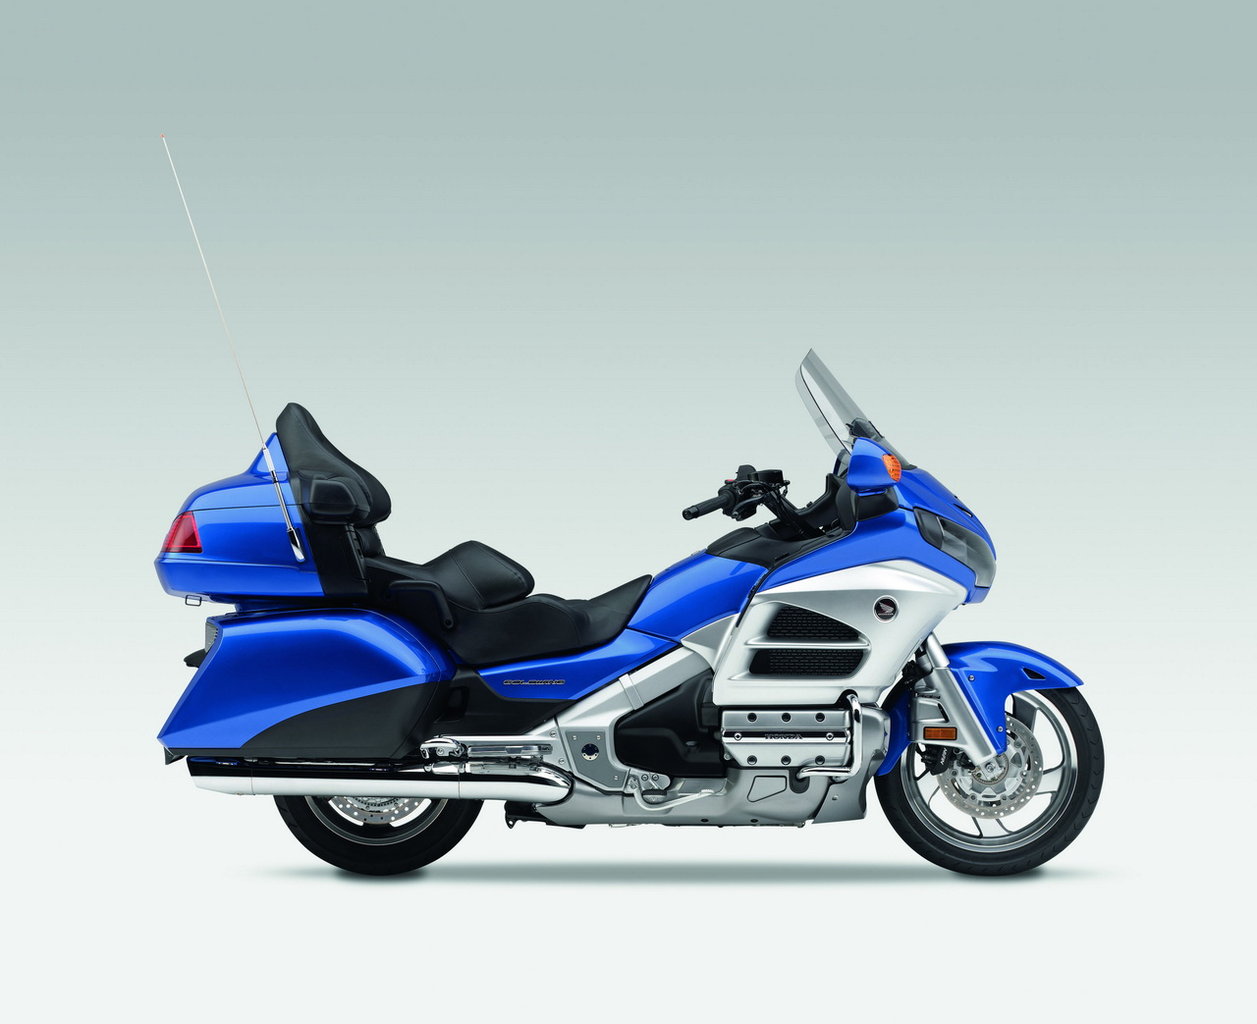 Listino Suzuki V-Strom 1000 Touring - image 14690_honda-goldwingbase on https://moto.motori.net